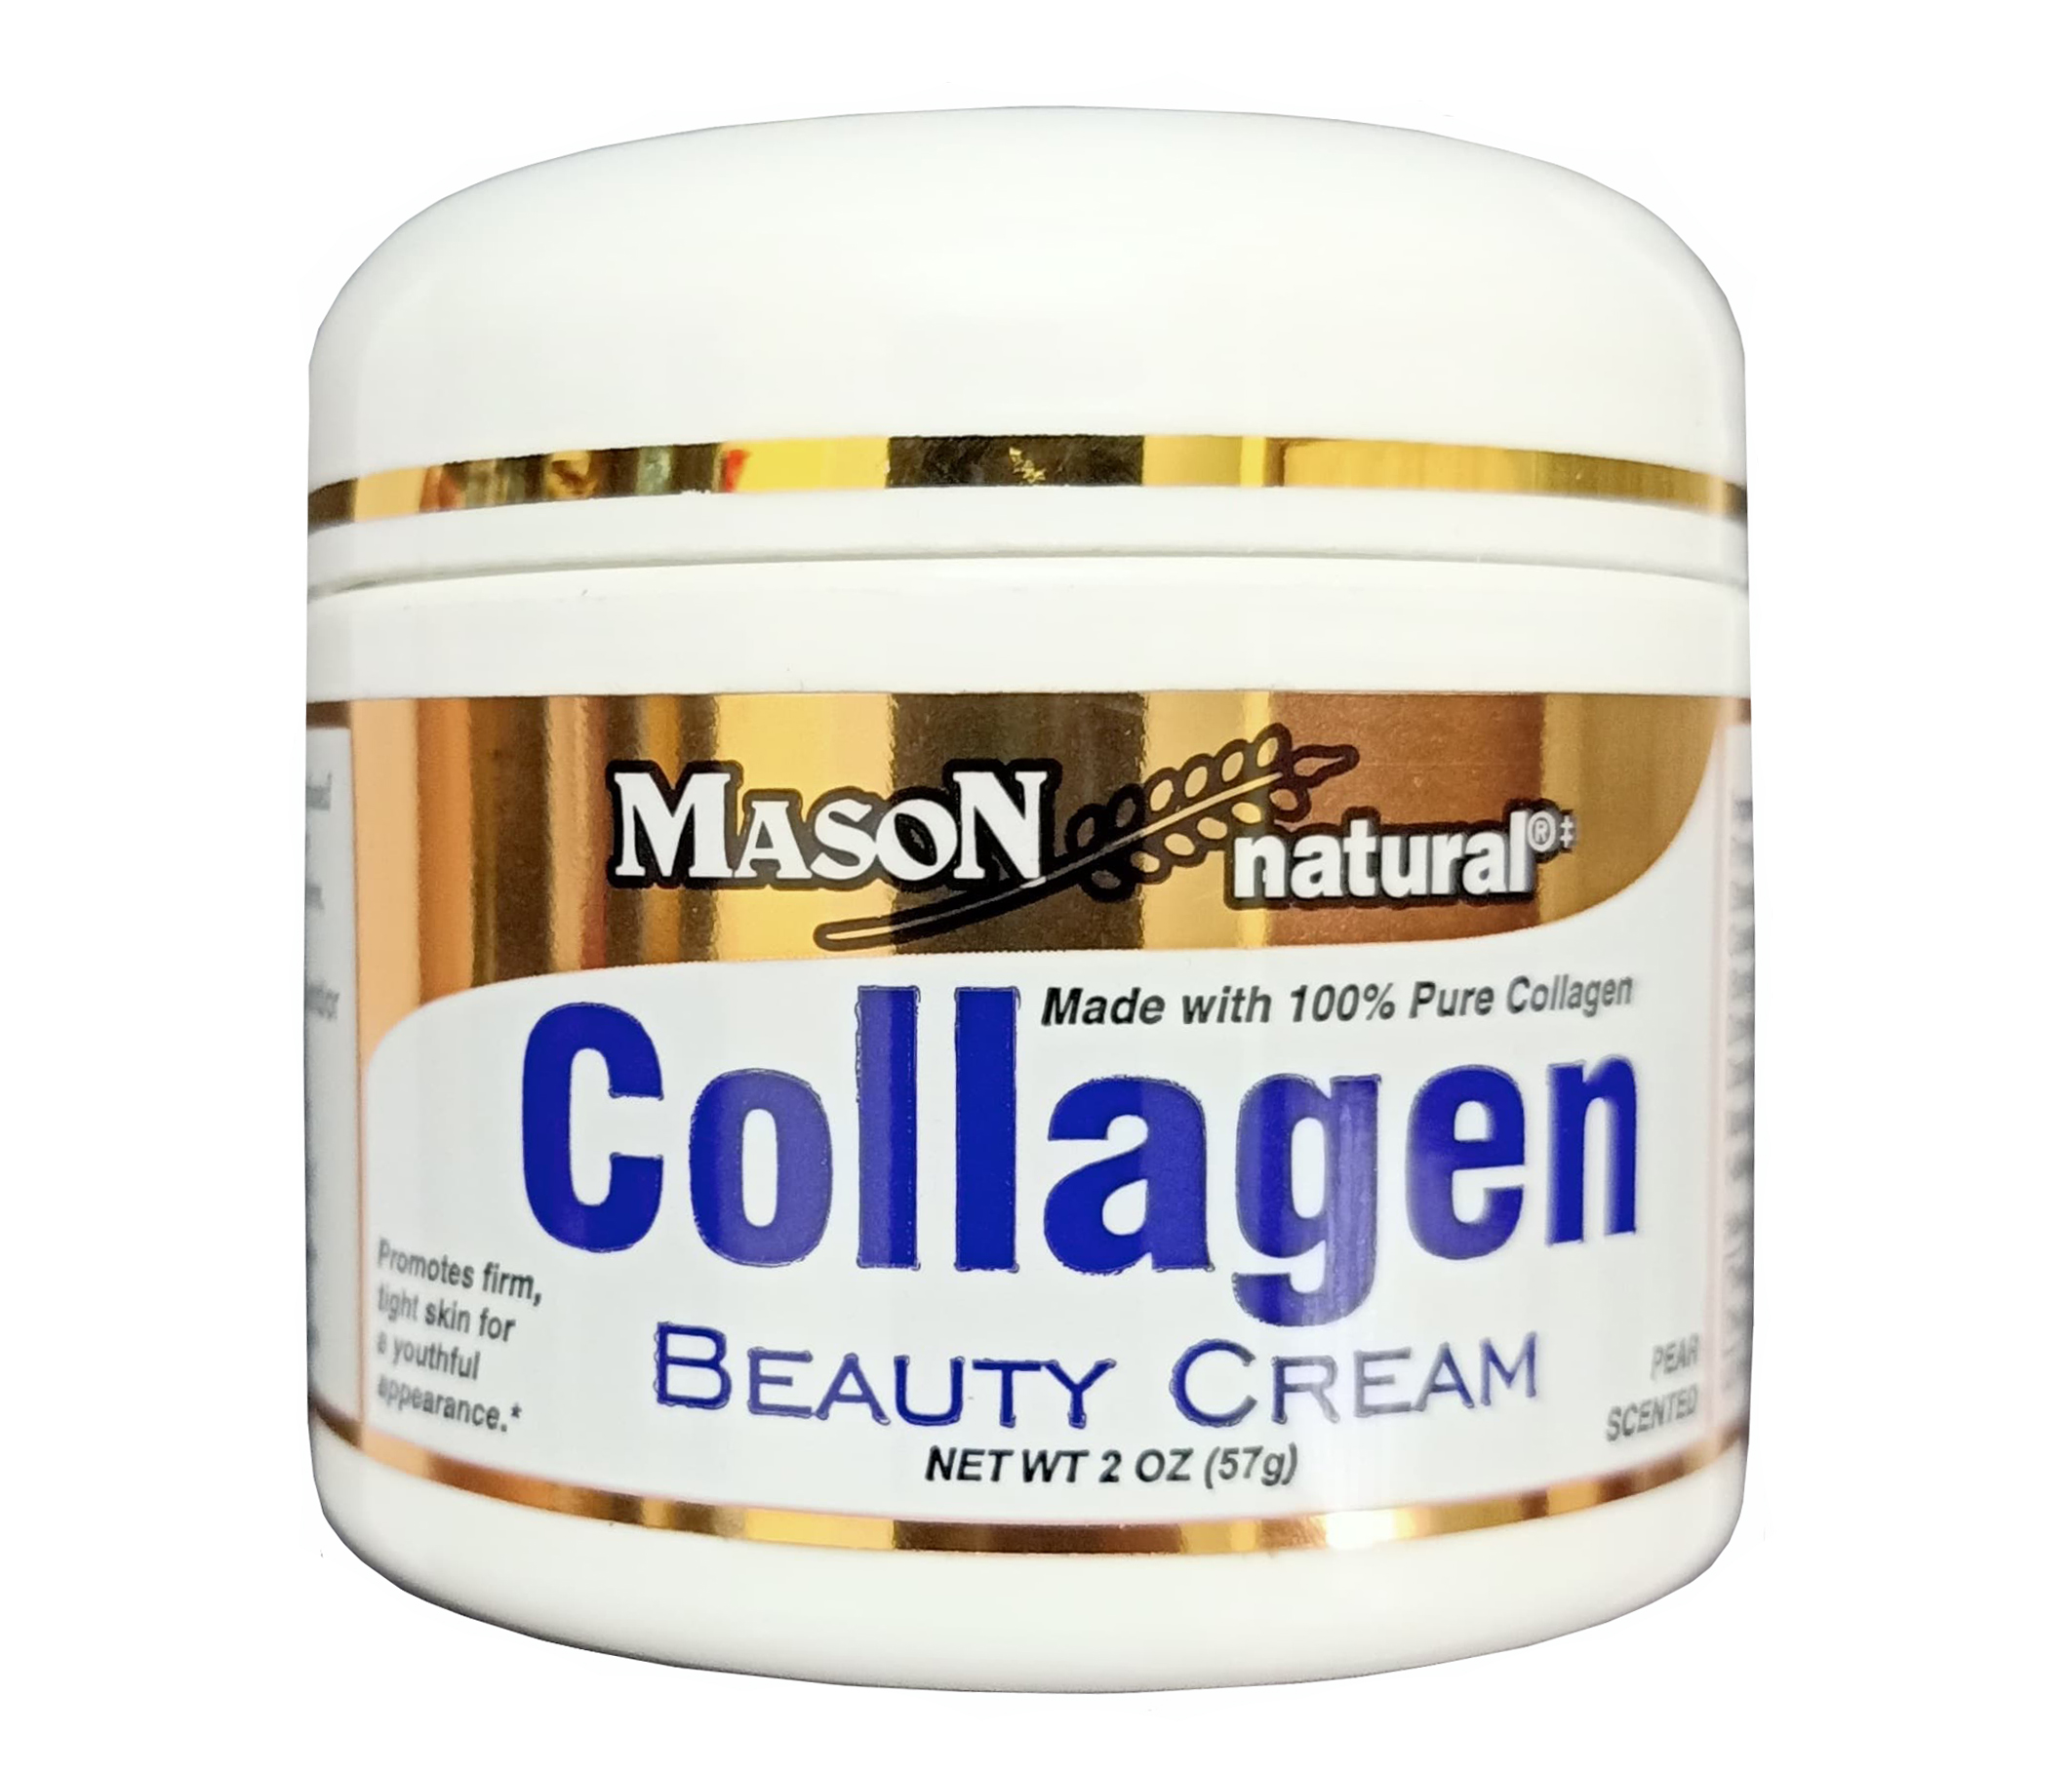  Kem dưỡng da Collagen Mason giúp giảm thâm nám